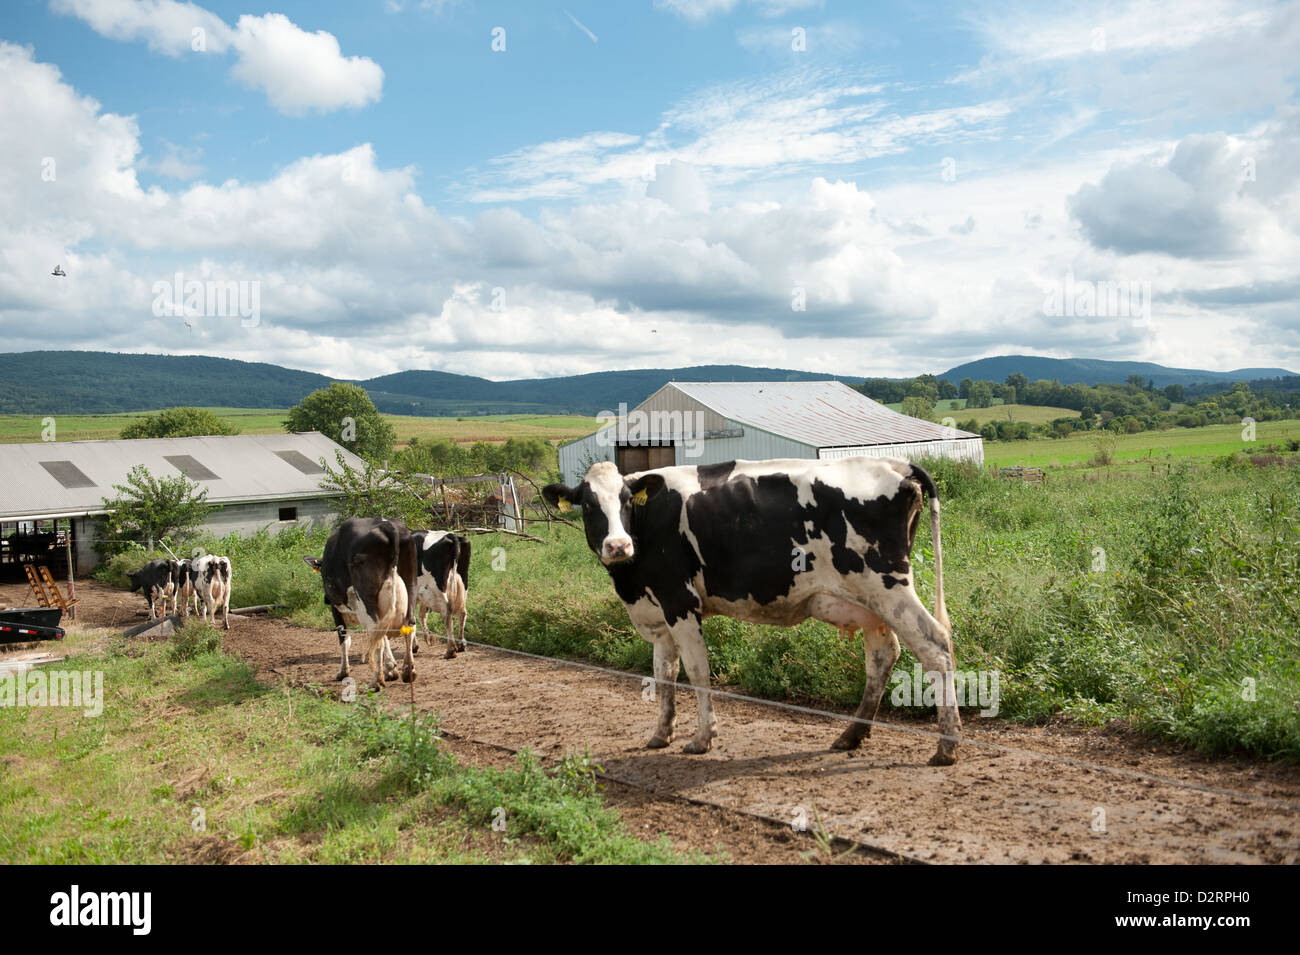 Dairy cows walking down dirt path on a farm  Stock Photo